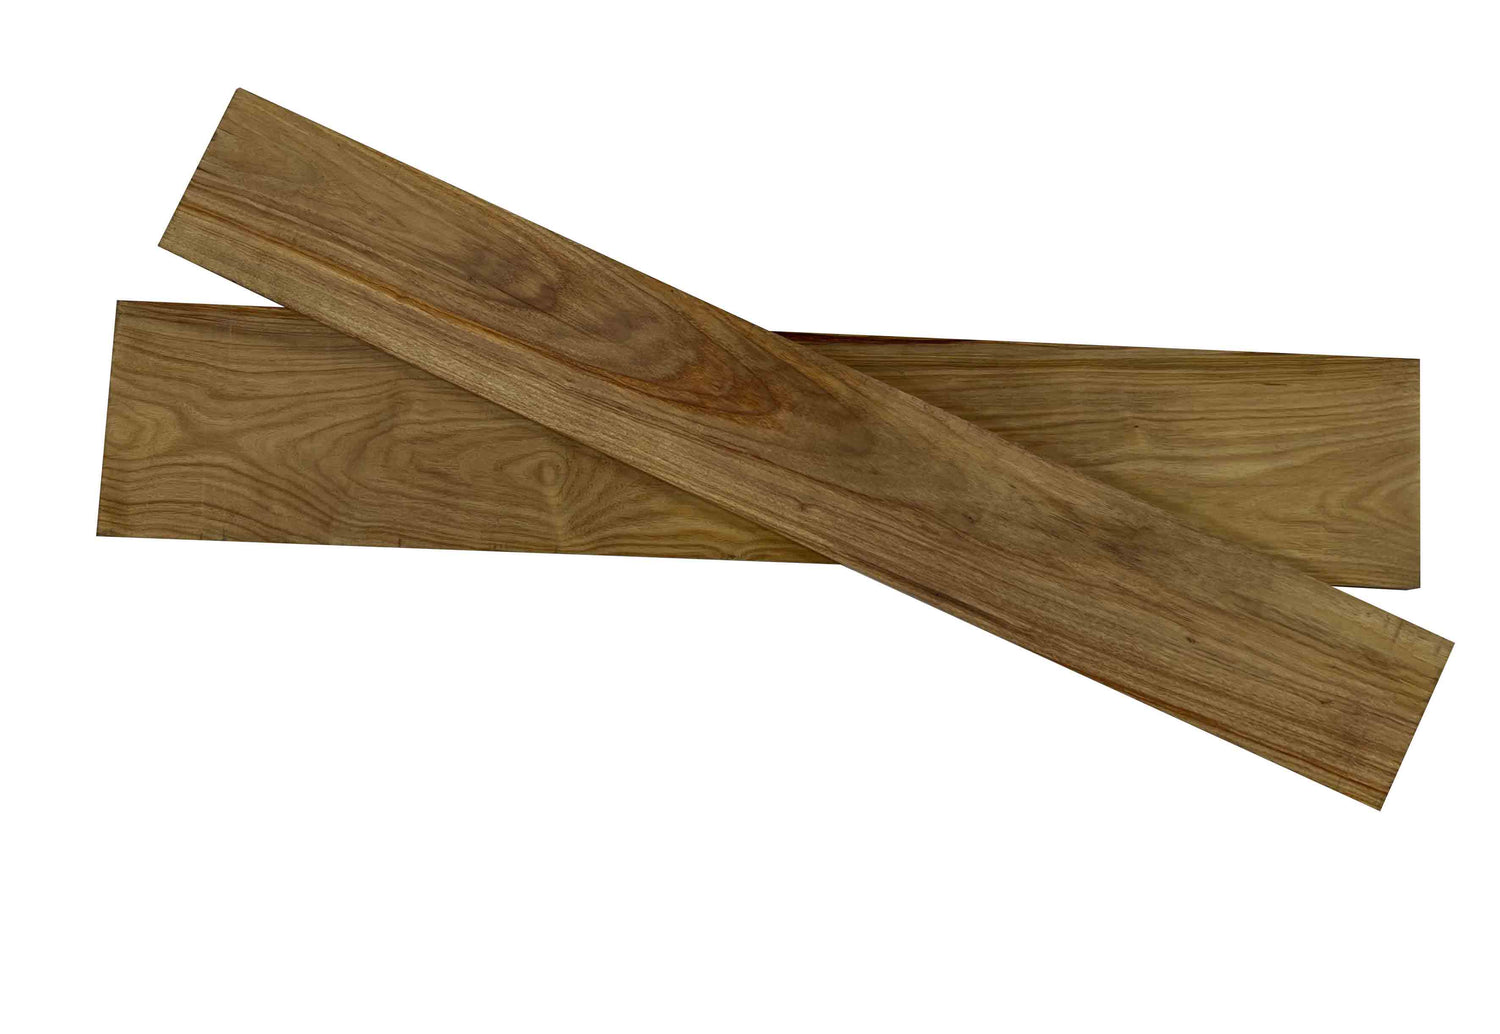 Premium Canarywood 4/4 Lumber - Exotic Wood Zone - Buy online Across USA 